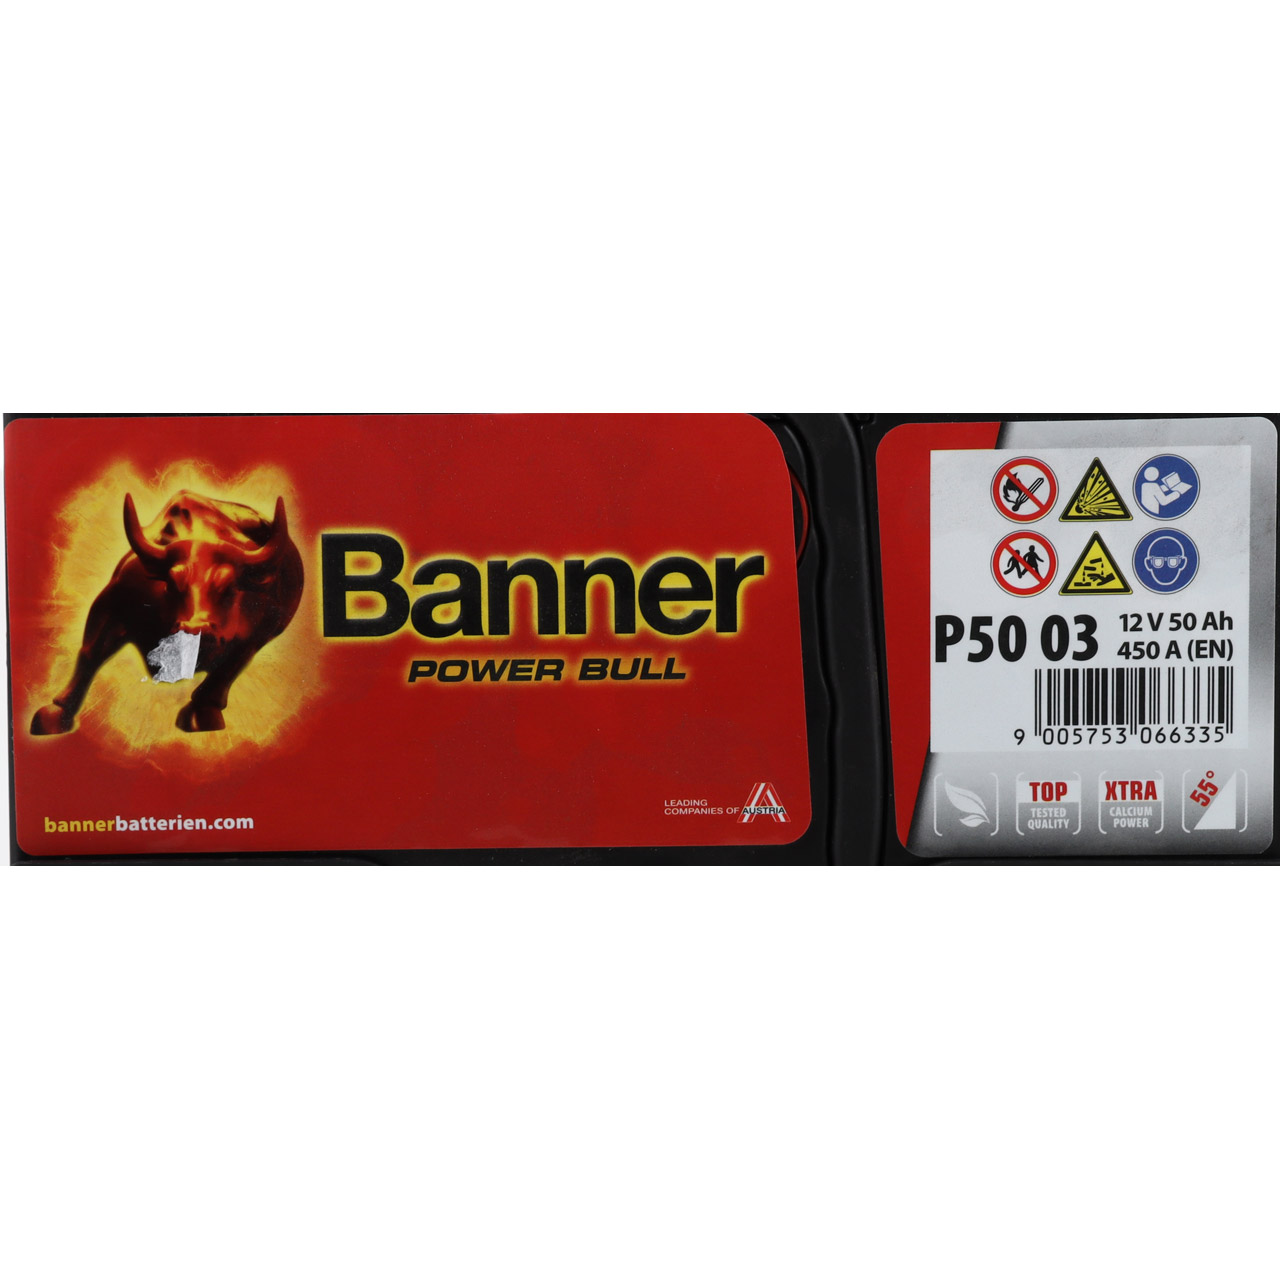 BANNER P5003 Power Bull Professional Autobatterie Batterie 12V 50Ah 450A